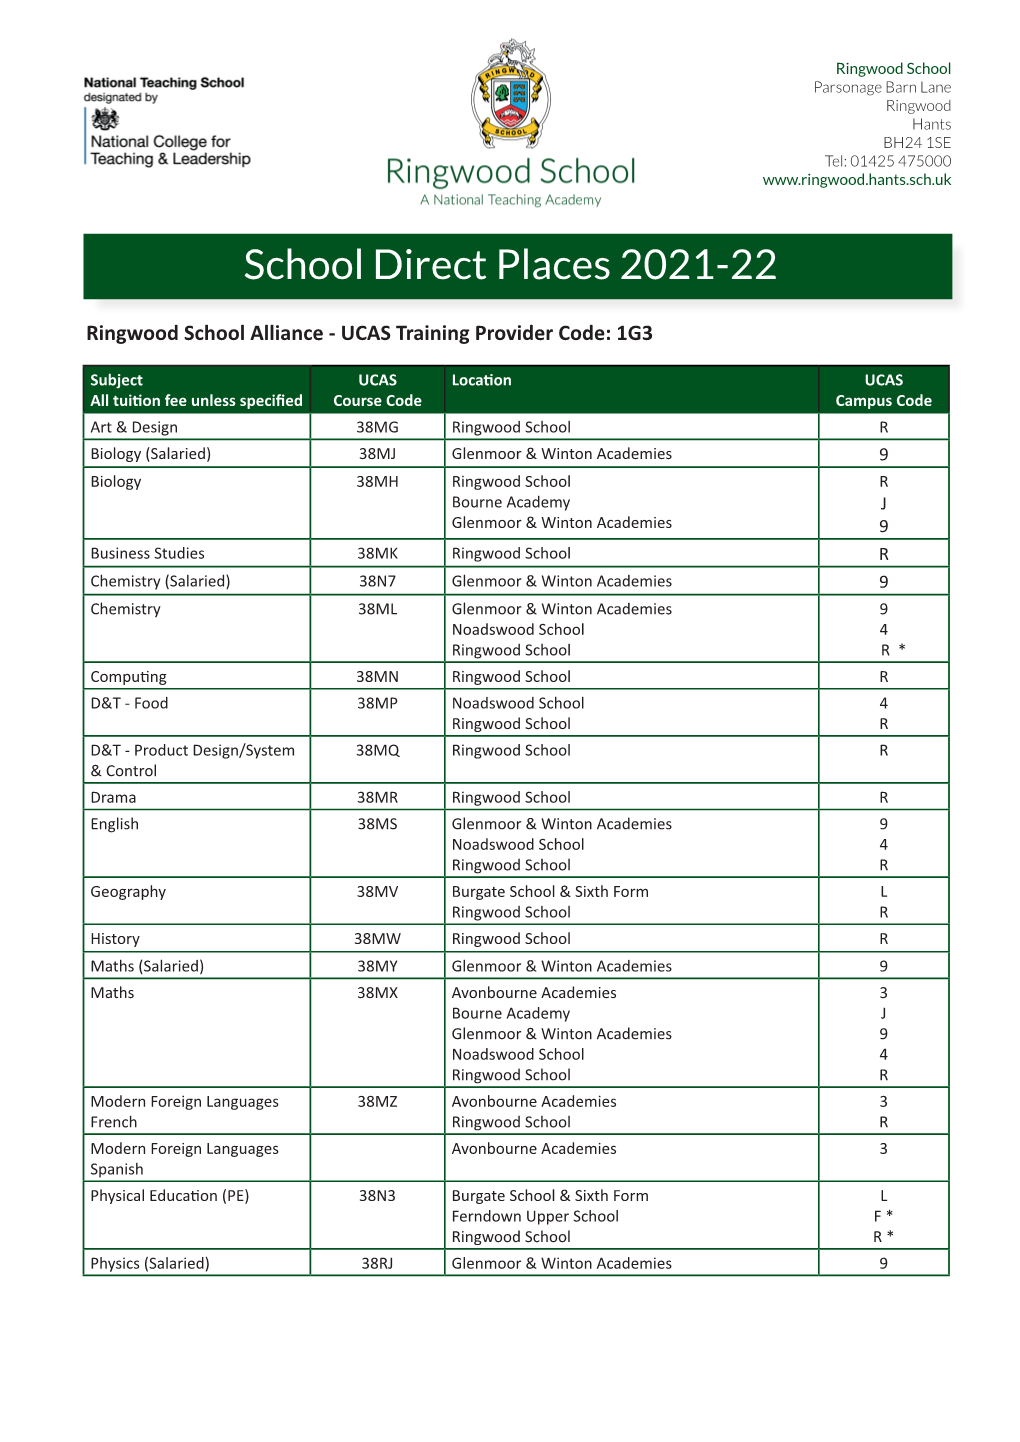 School Direct Places 2021-22